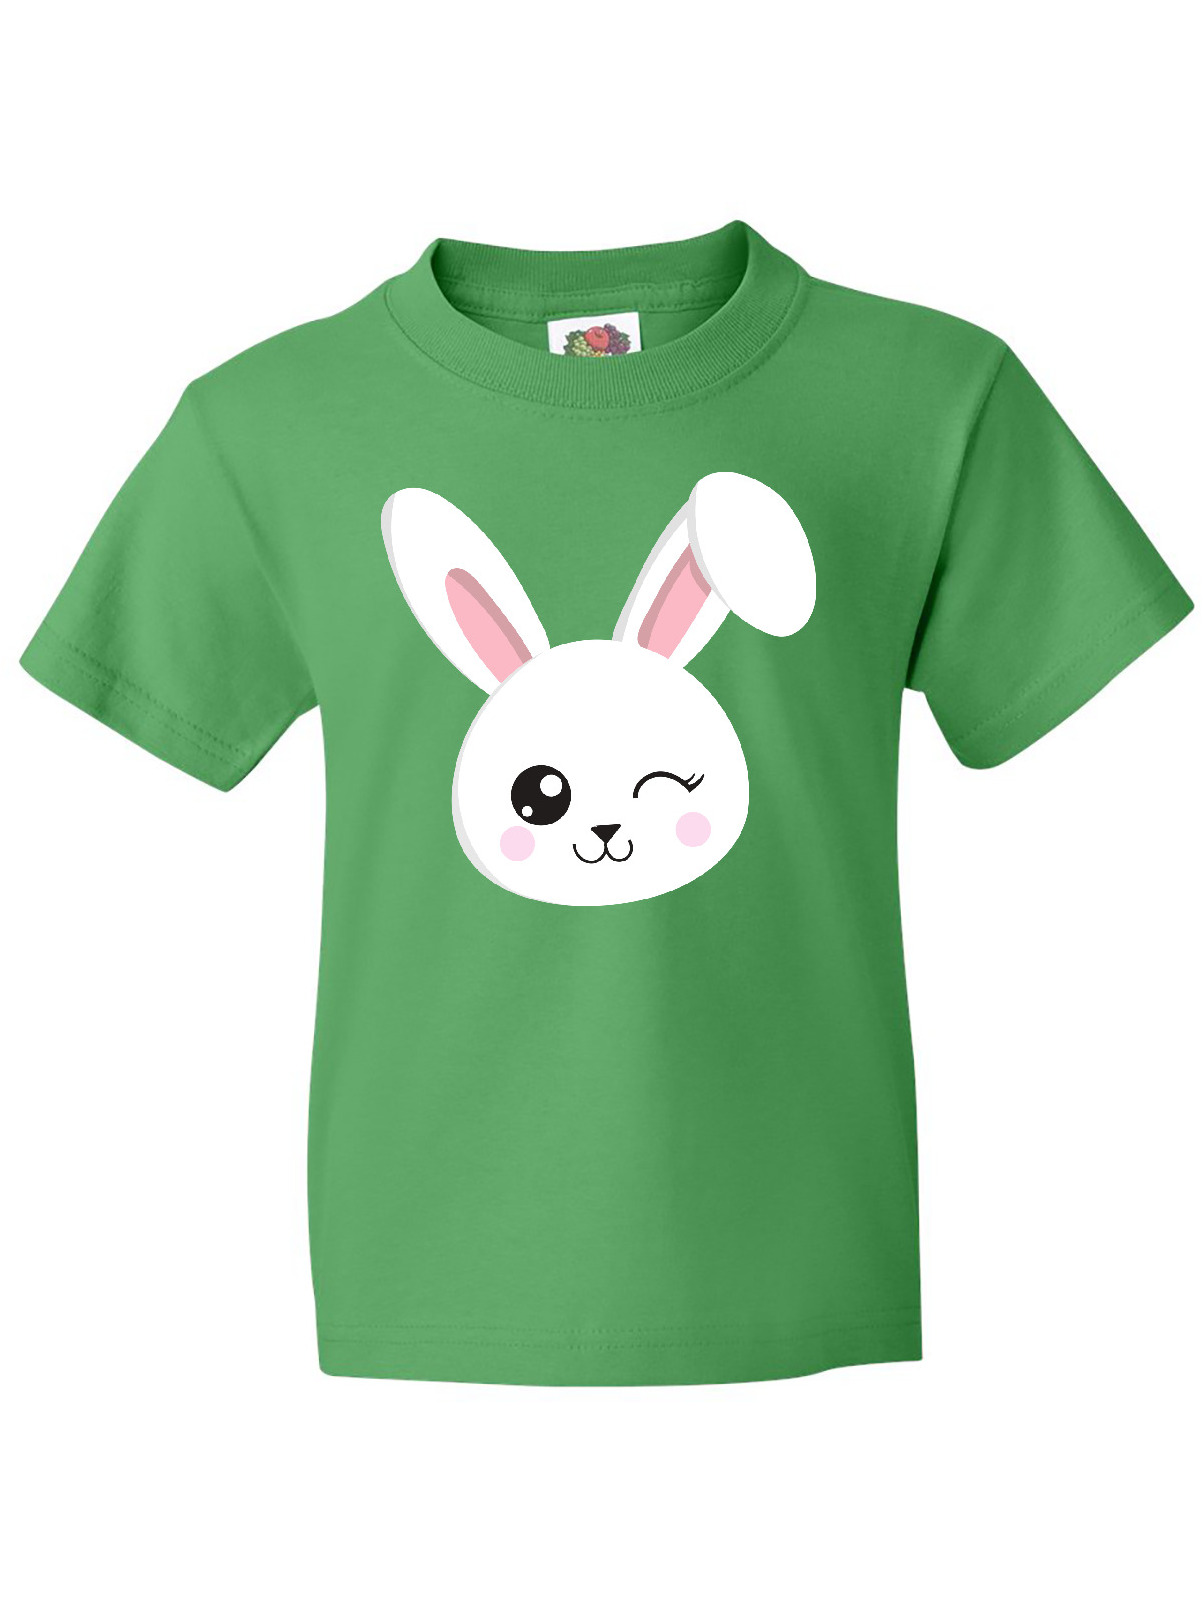 Inktastic Cute Bunny, Bunny Head, White Bunny, Winking Bunny Youth T-Shirt - image 1 of 4